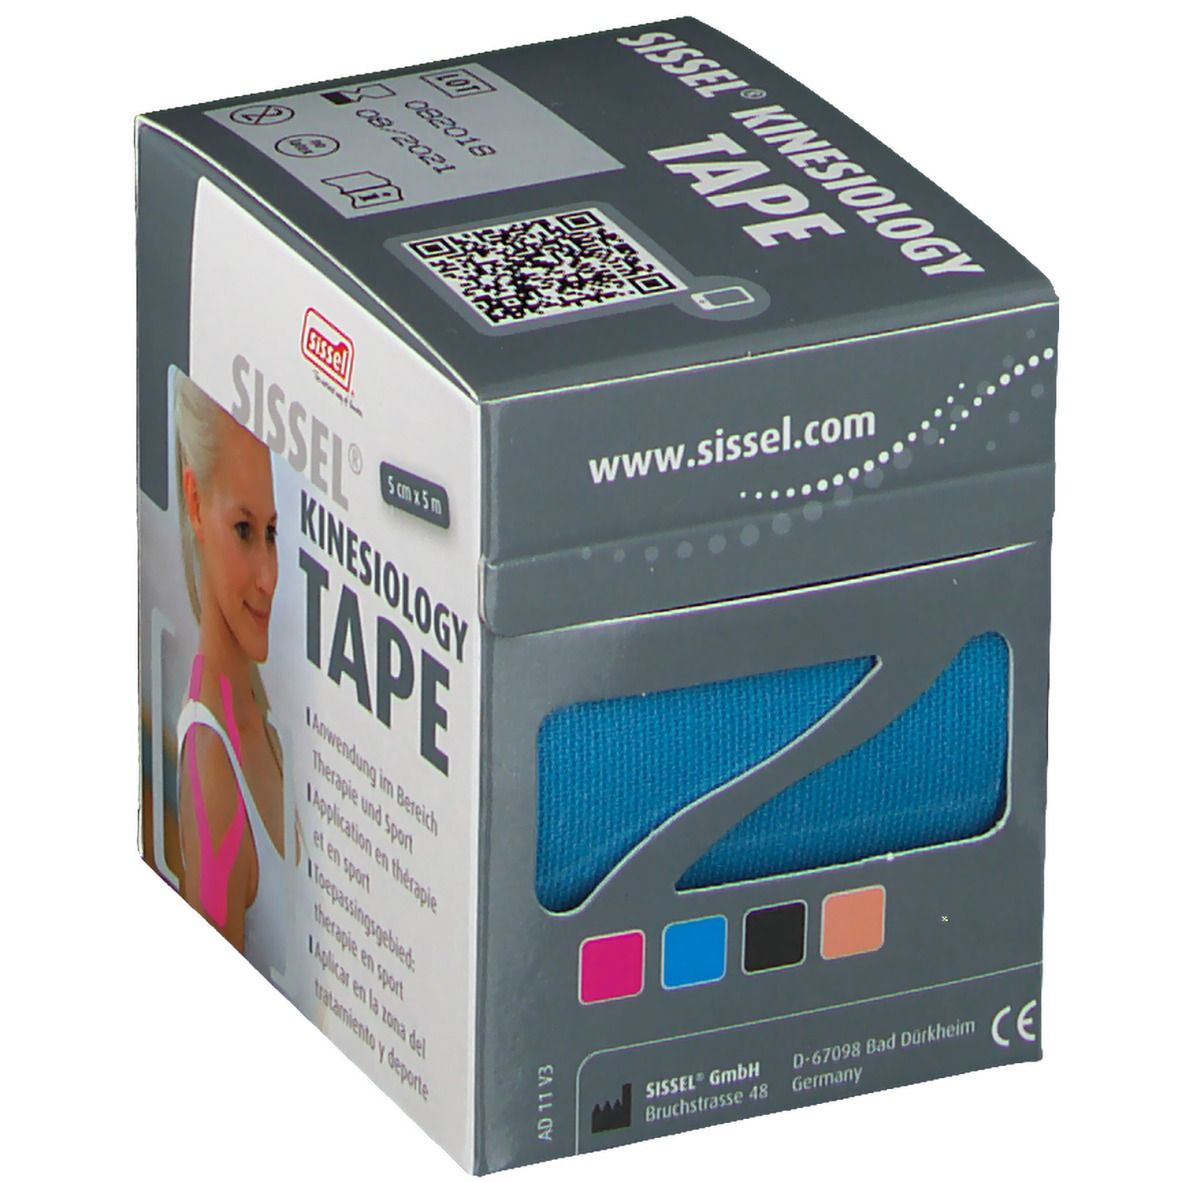 Sissel® Kinesiology Tape Bleu 5 cm x 5 m